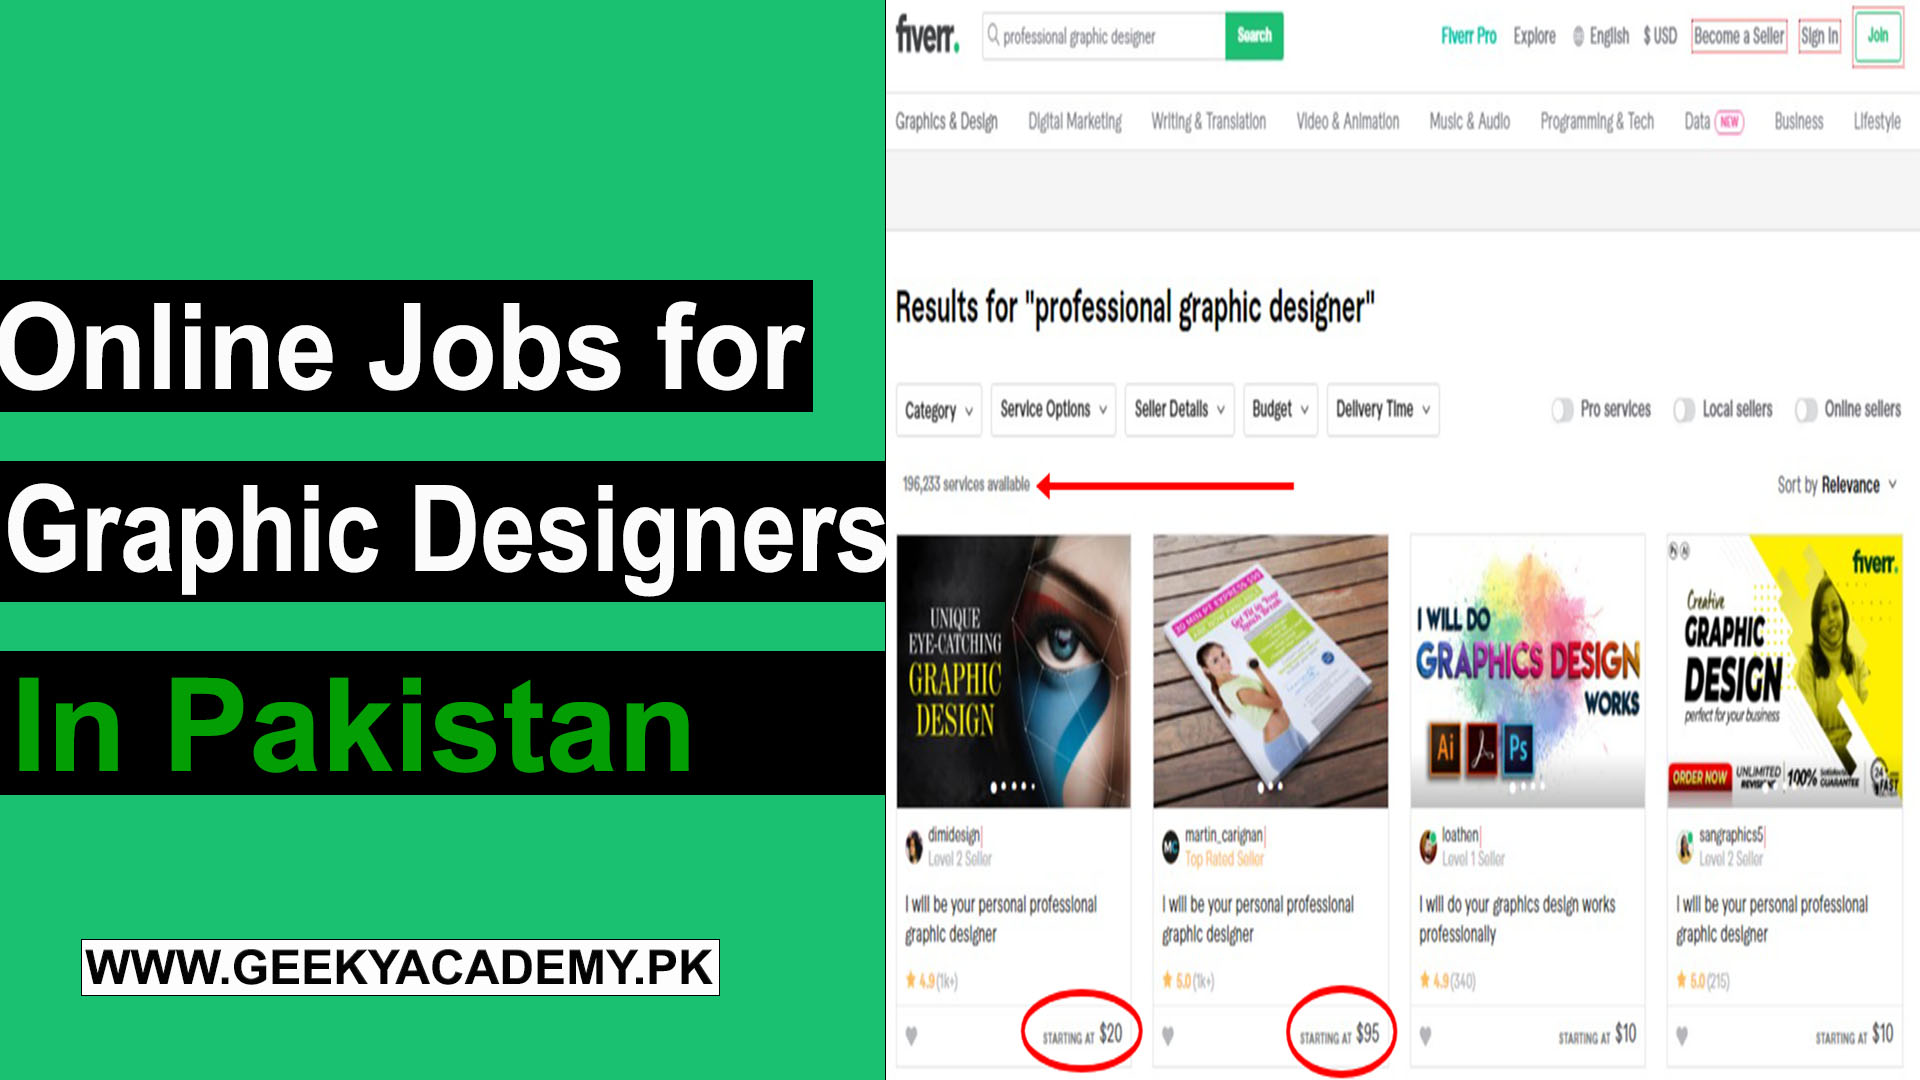 Online Jobs for Graphic Designers in Pakistan